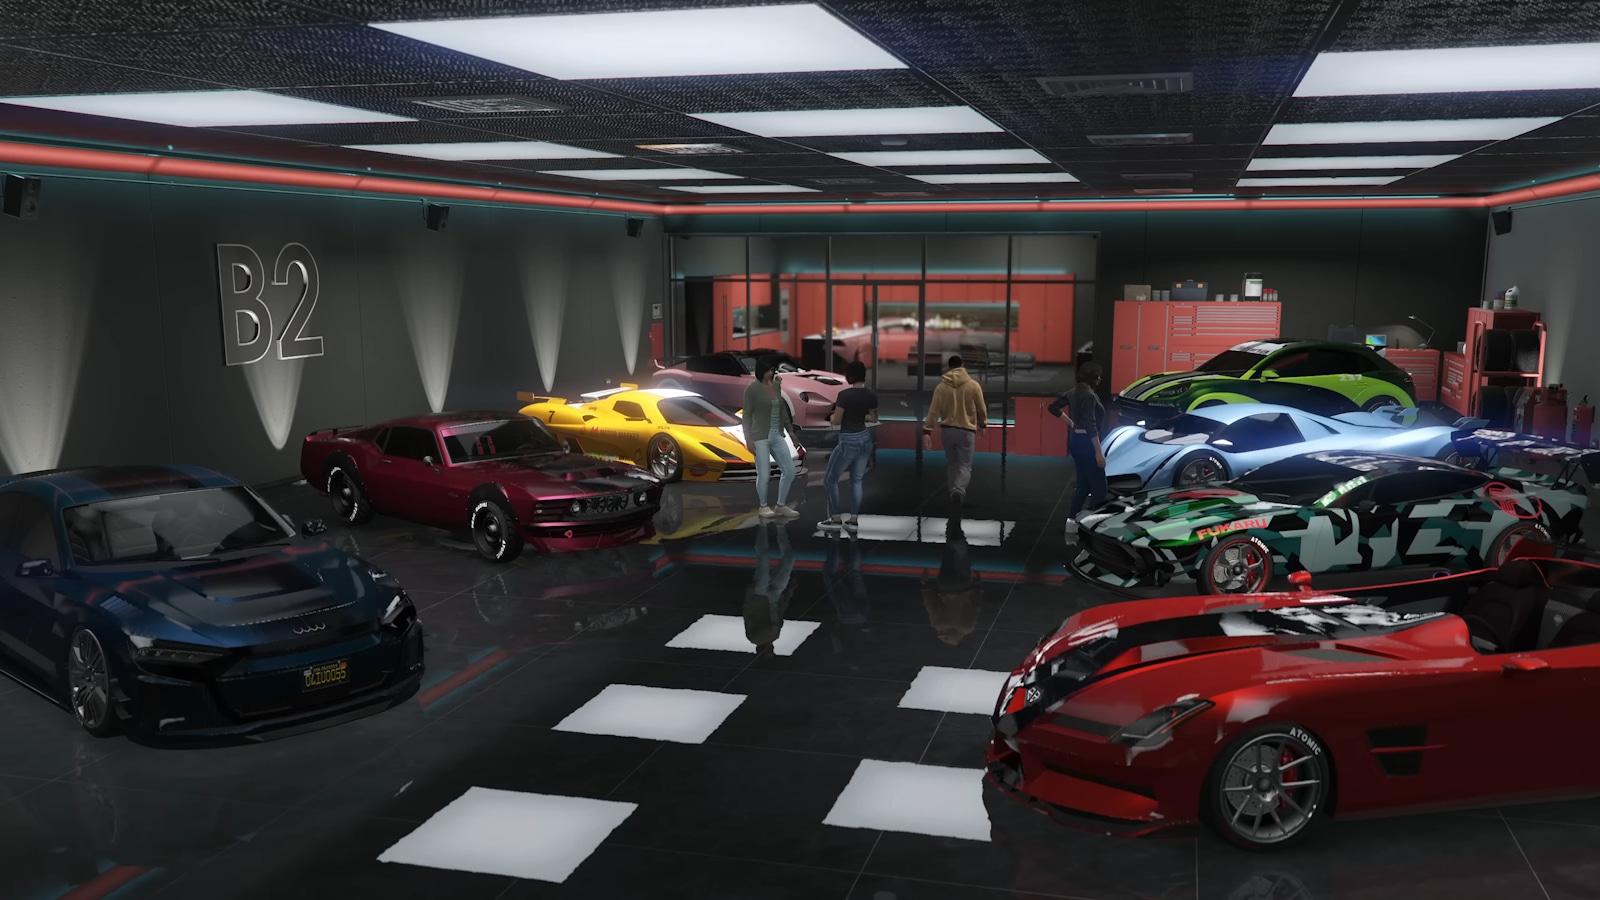 GTA Online 50 car garage as seen in update reveal trailer.